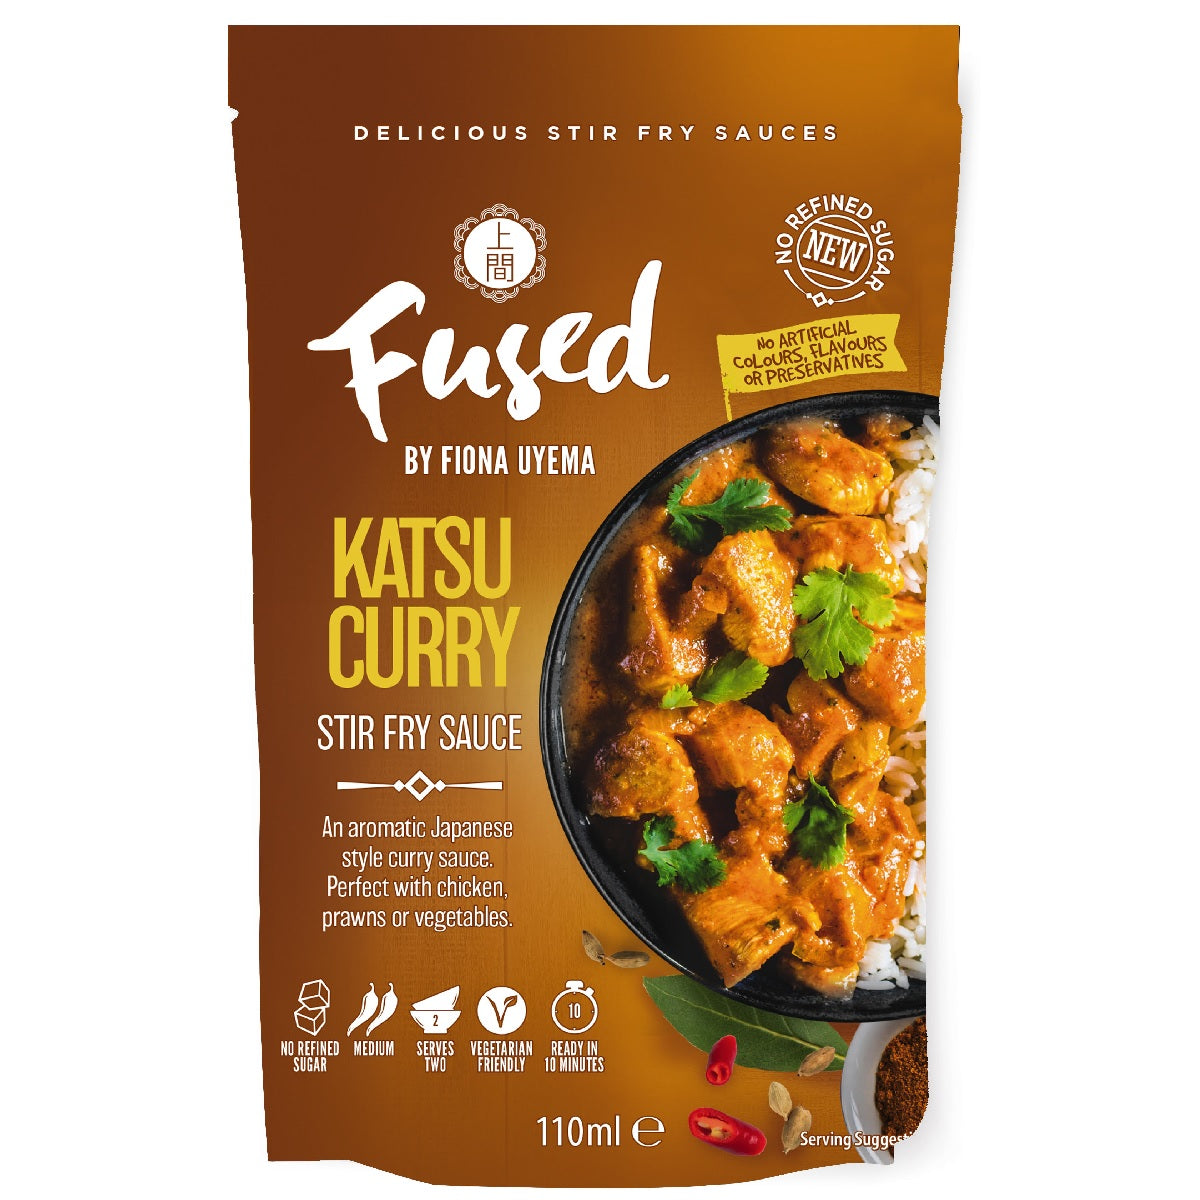 Fused Katsu Curry Stir Fry Sauce by Fiona Uyema 110ml